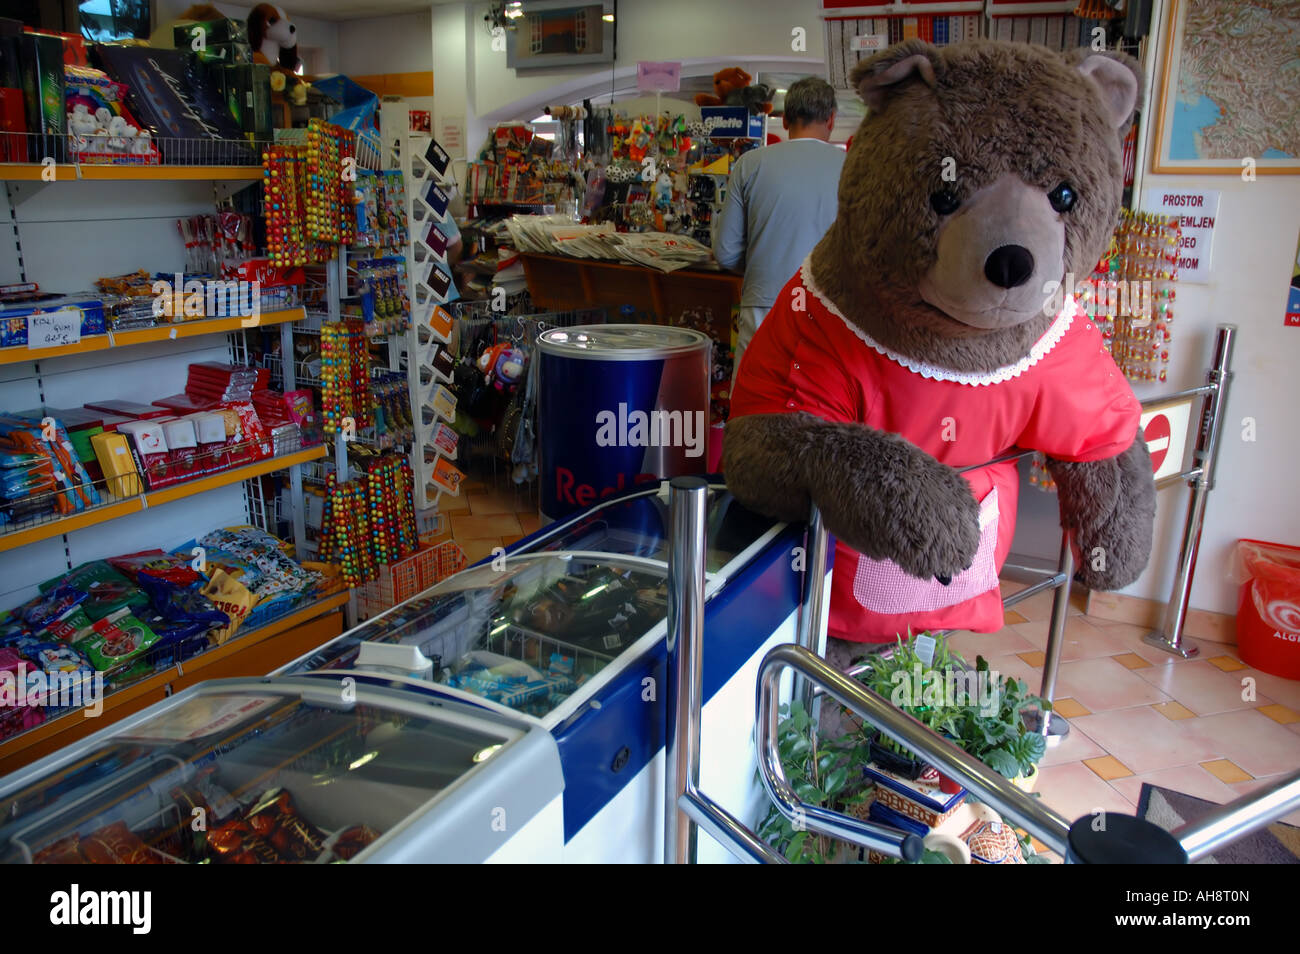 Giant teddy bear greets customers at the entrance to supermarket Trojane Slovenia No PR Stock Photo